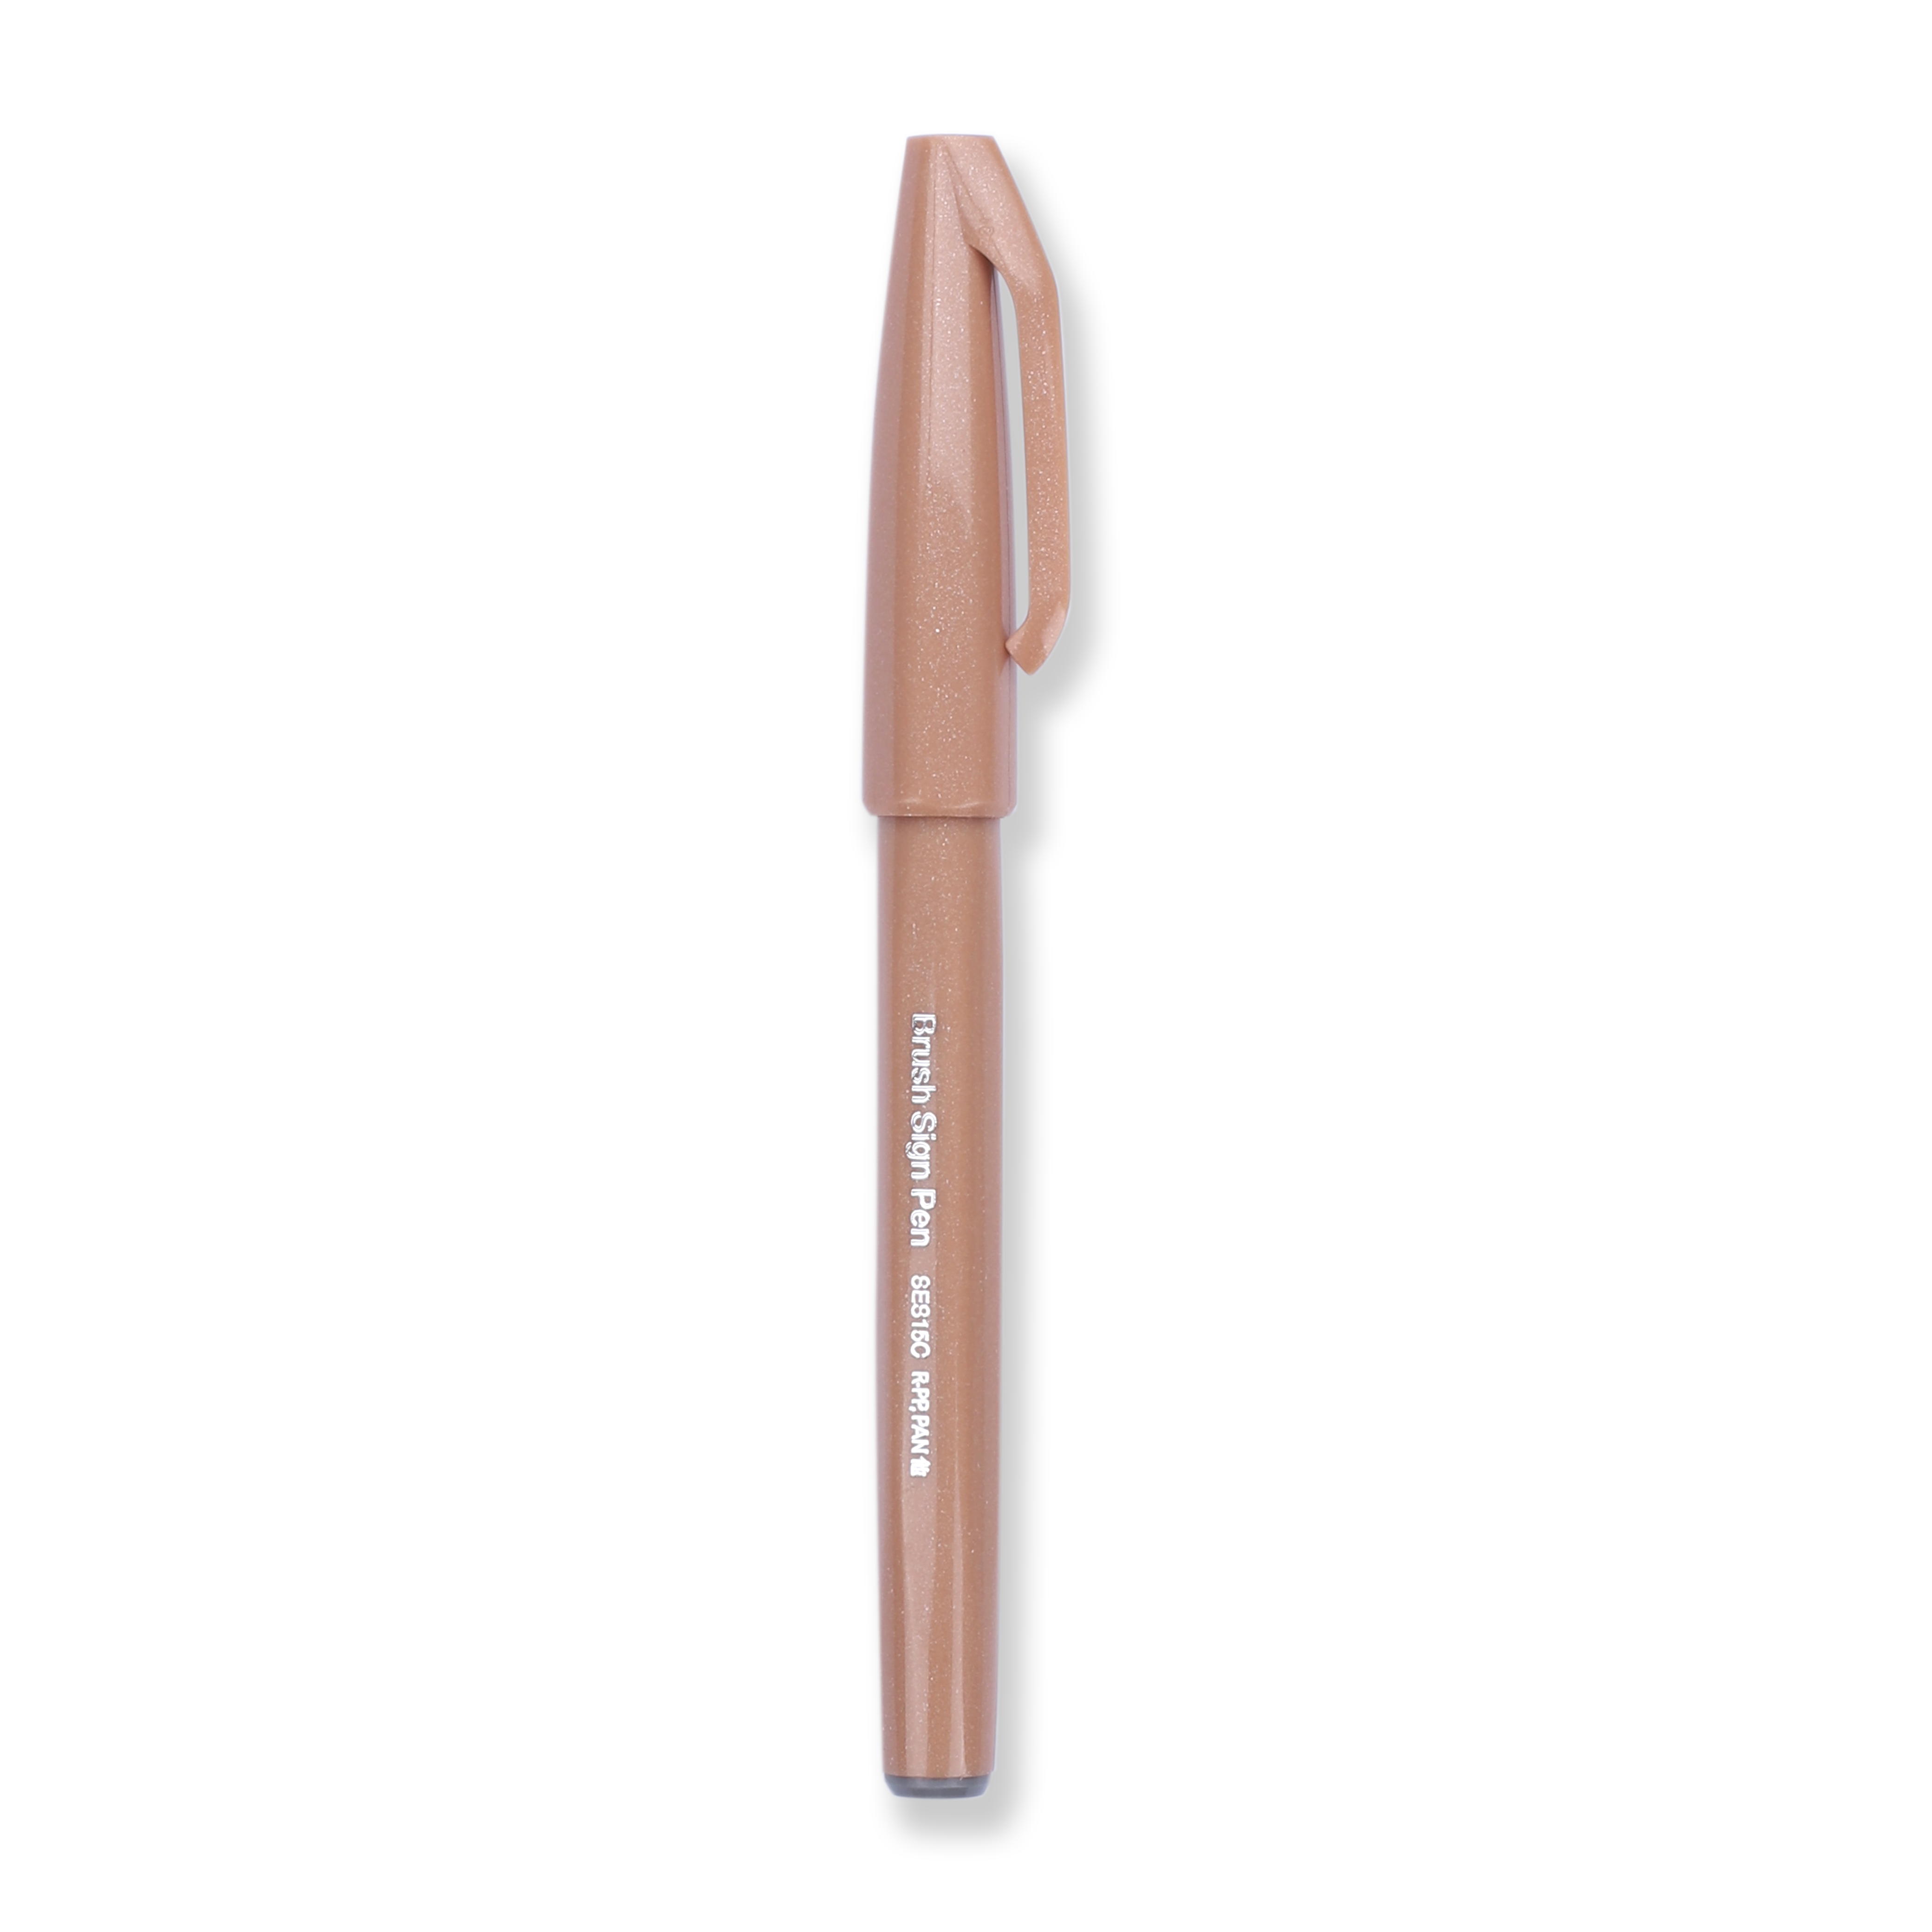 Pentel Fude Touch Brush Sign Pen - Marrón pálido - 2020 nuevos colores